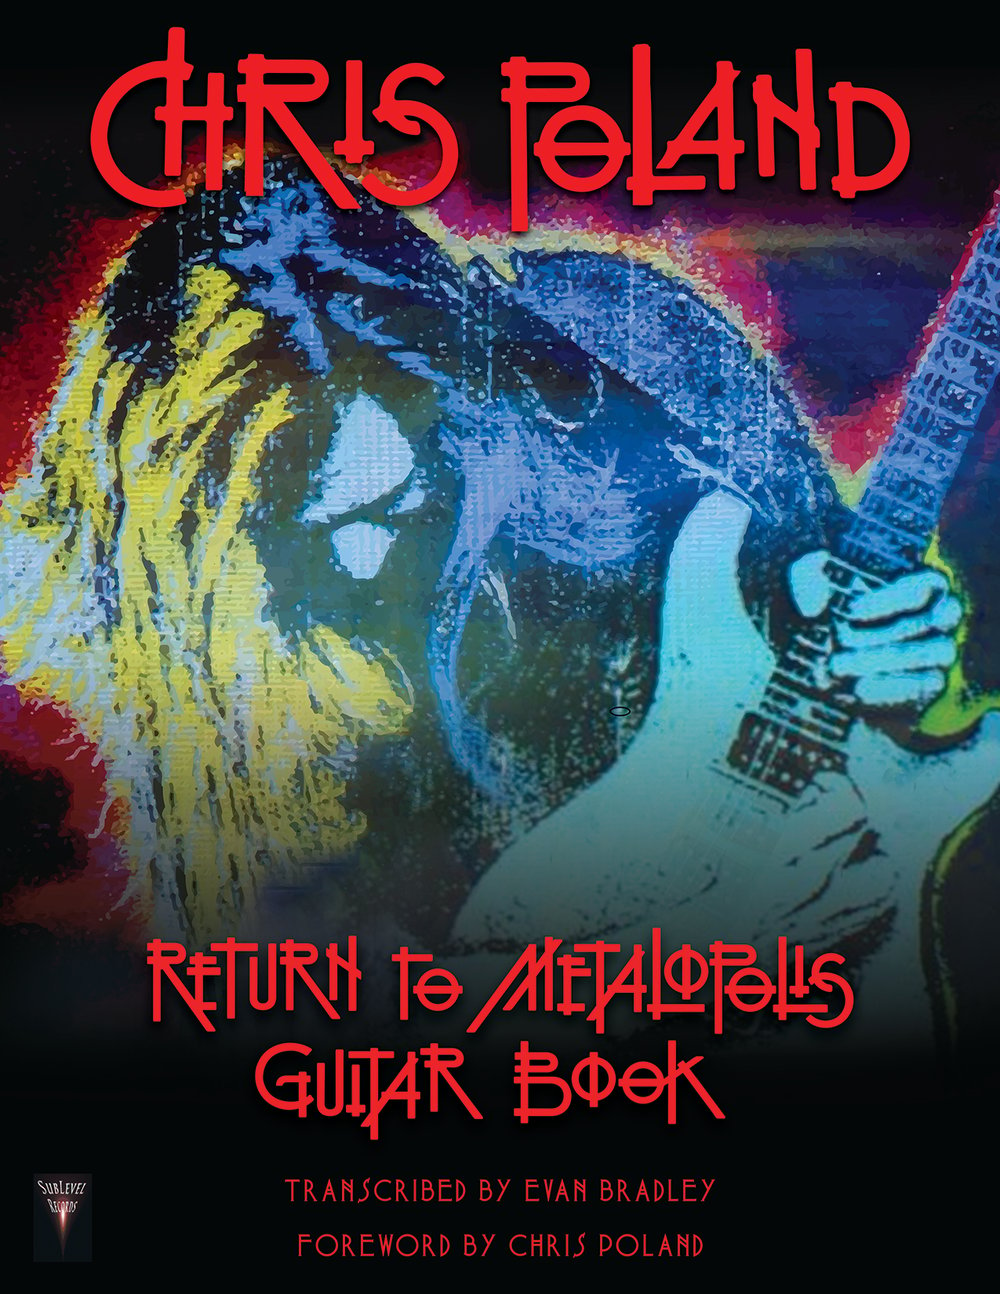 Chris Poland - Return to Metalopolis Guitar Book (eBook Edition + GP Files)